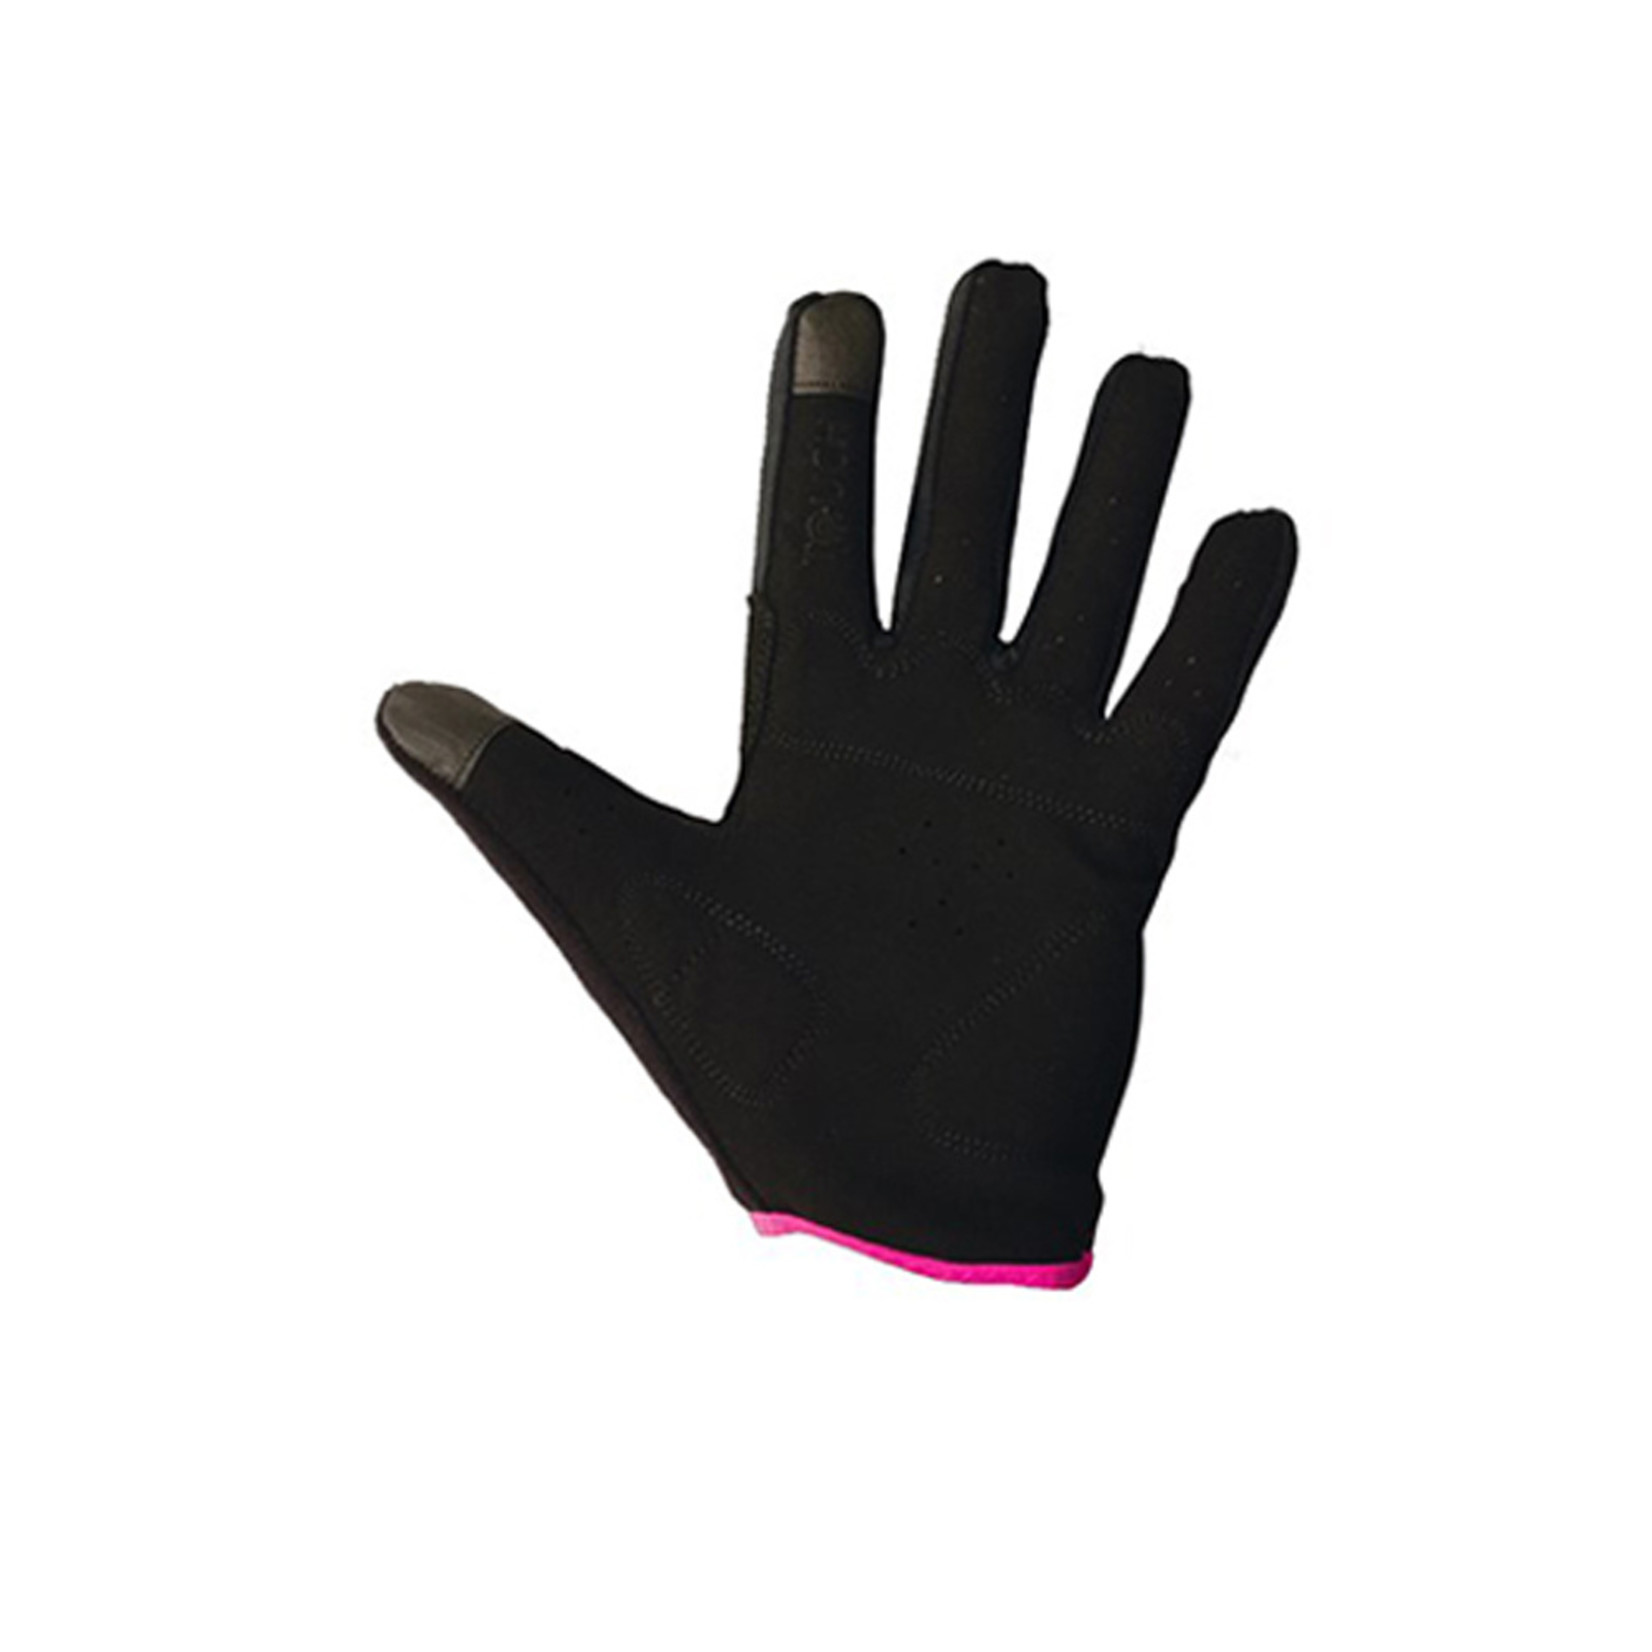 Azur Azur Bike/Cycling Lightweight Glove - L60 Series - Breathable - Pink - Medium